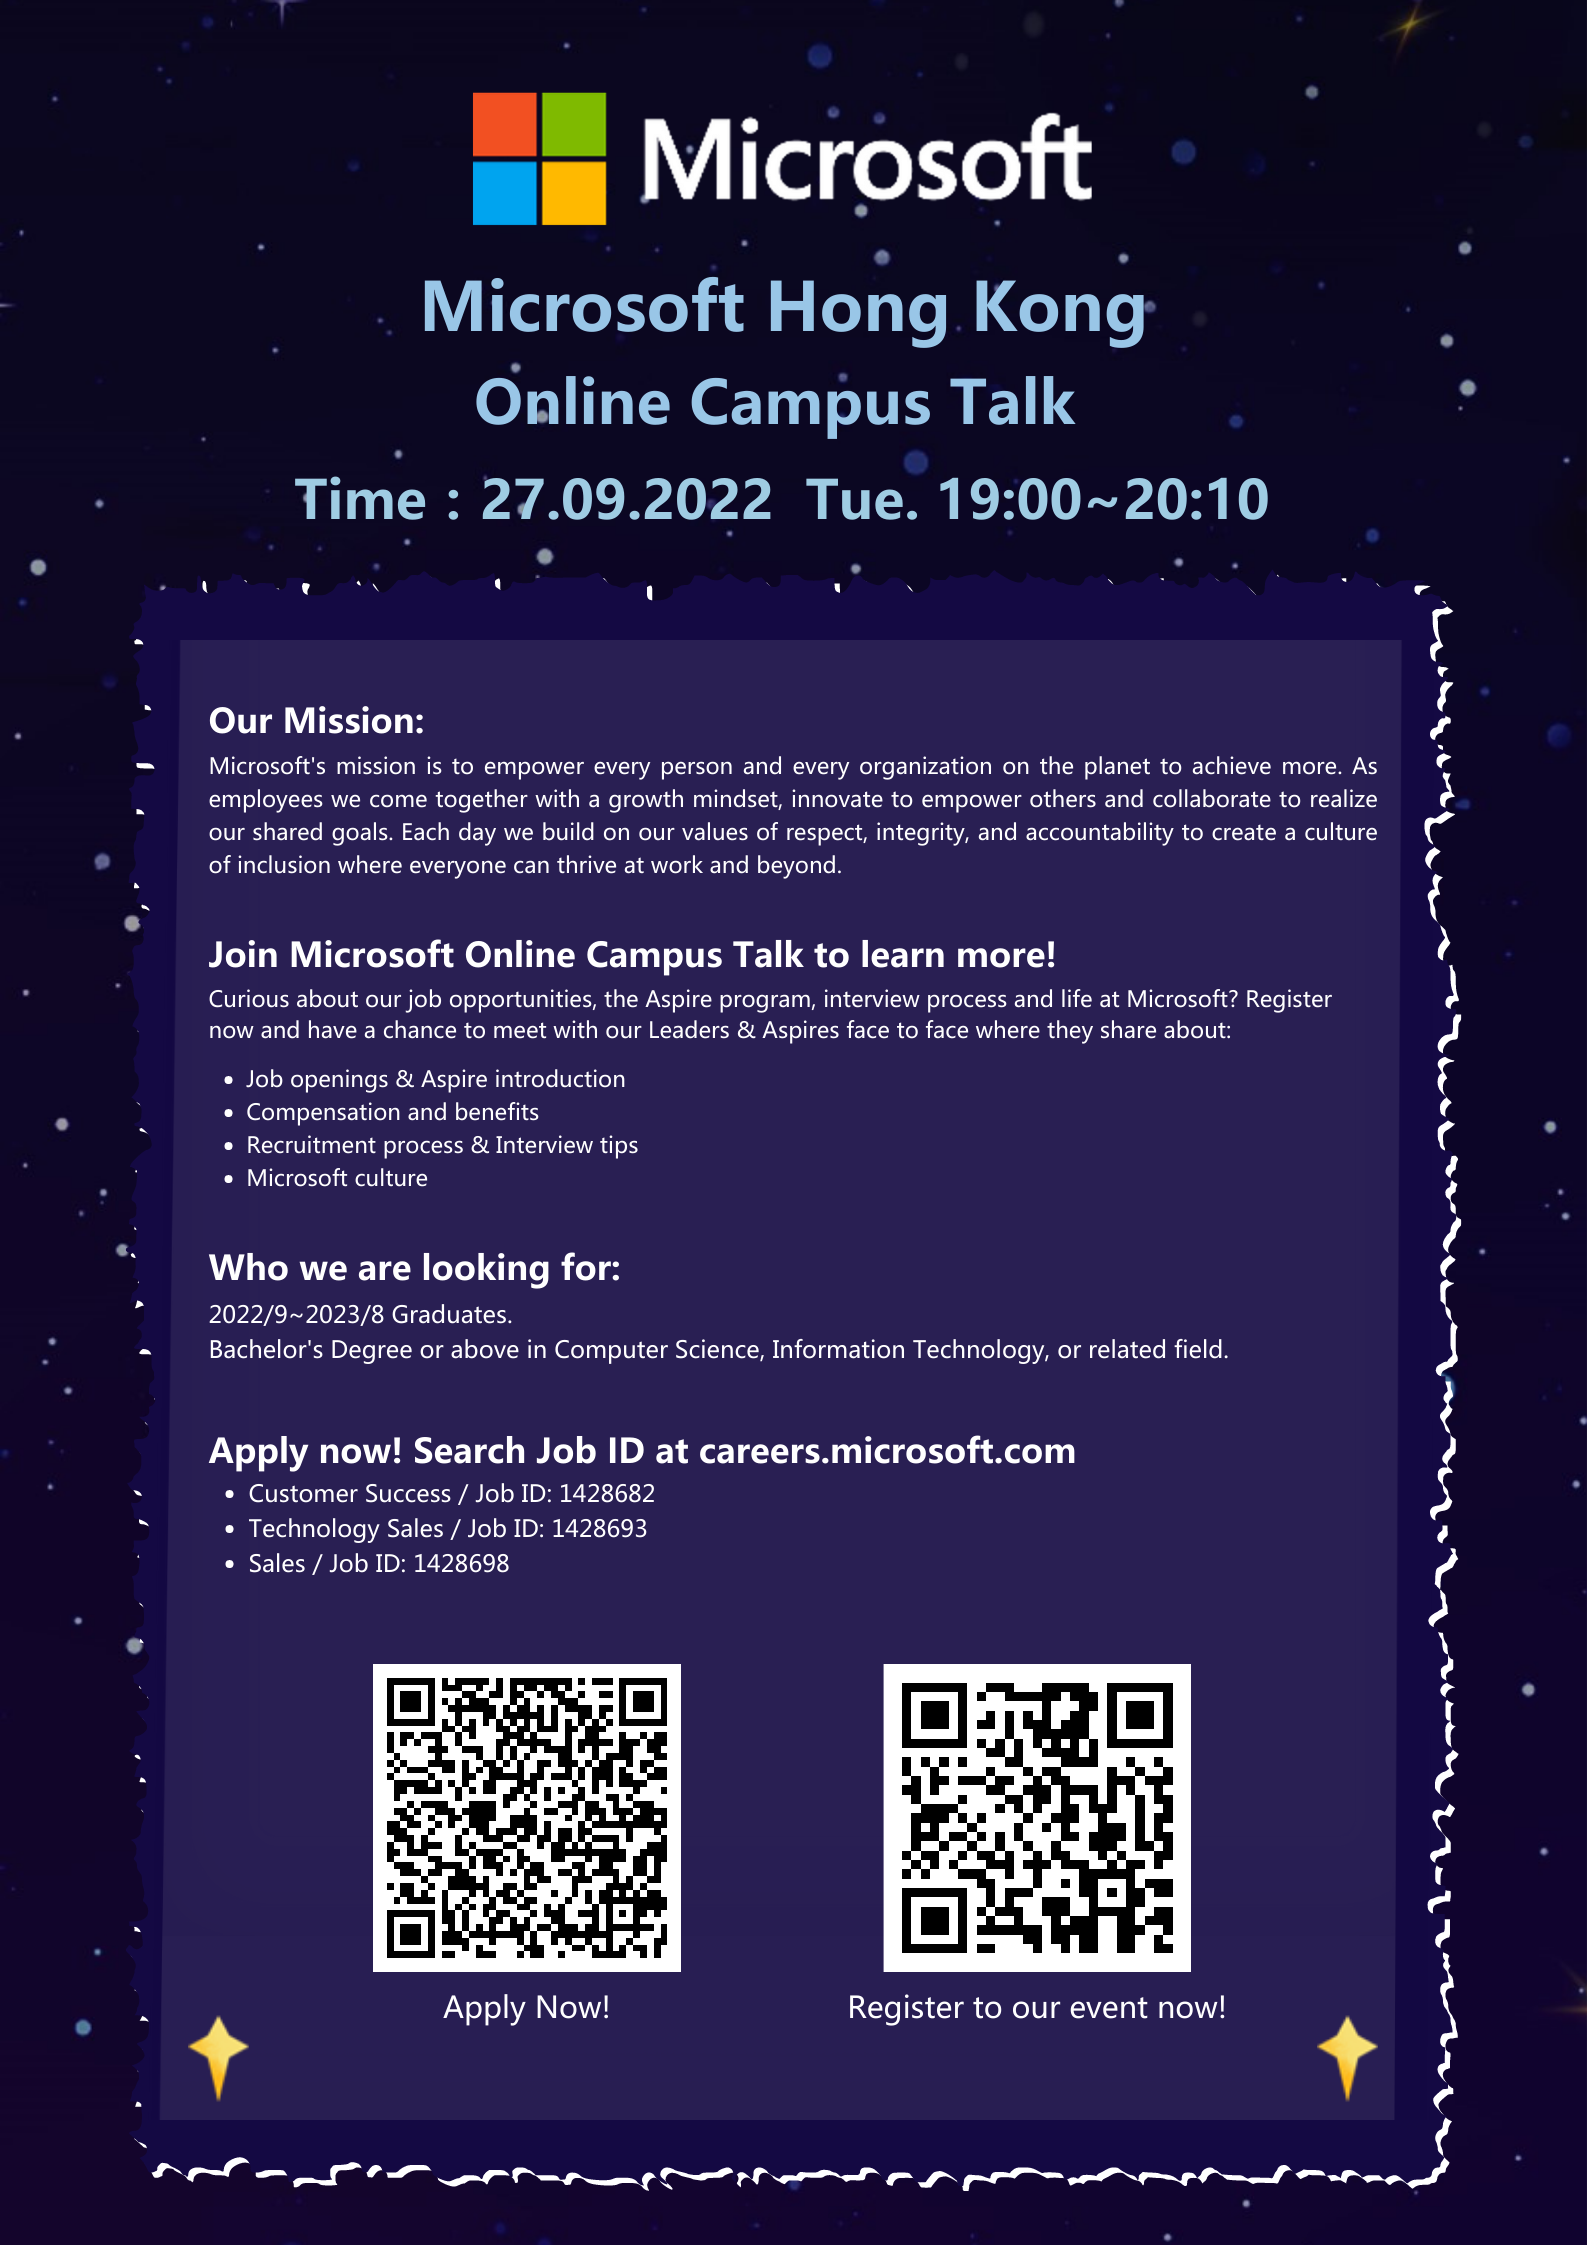 Online Campus Talk by Microsoft Hong Kong